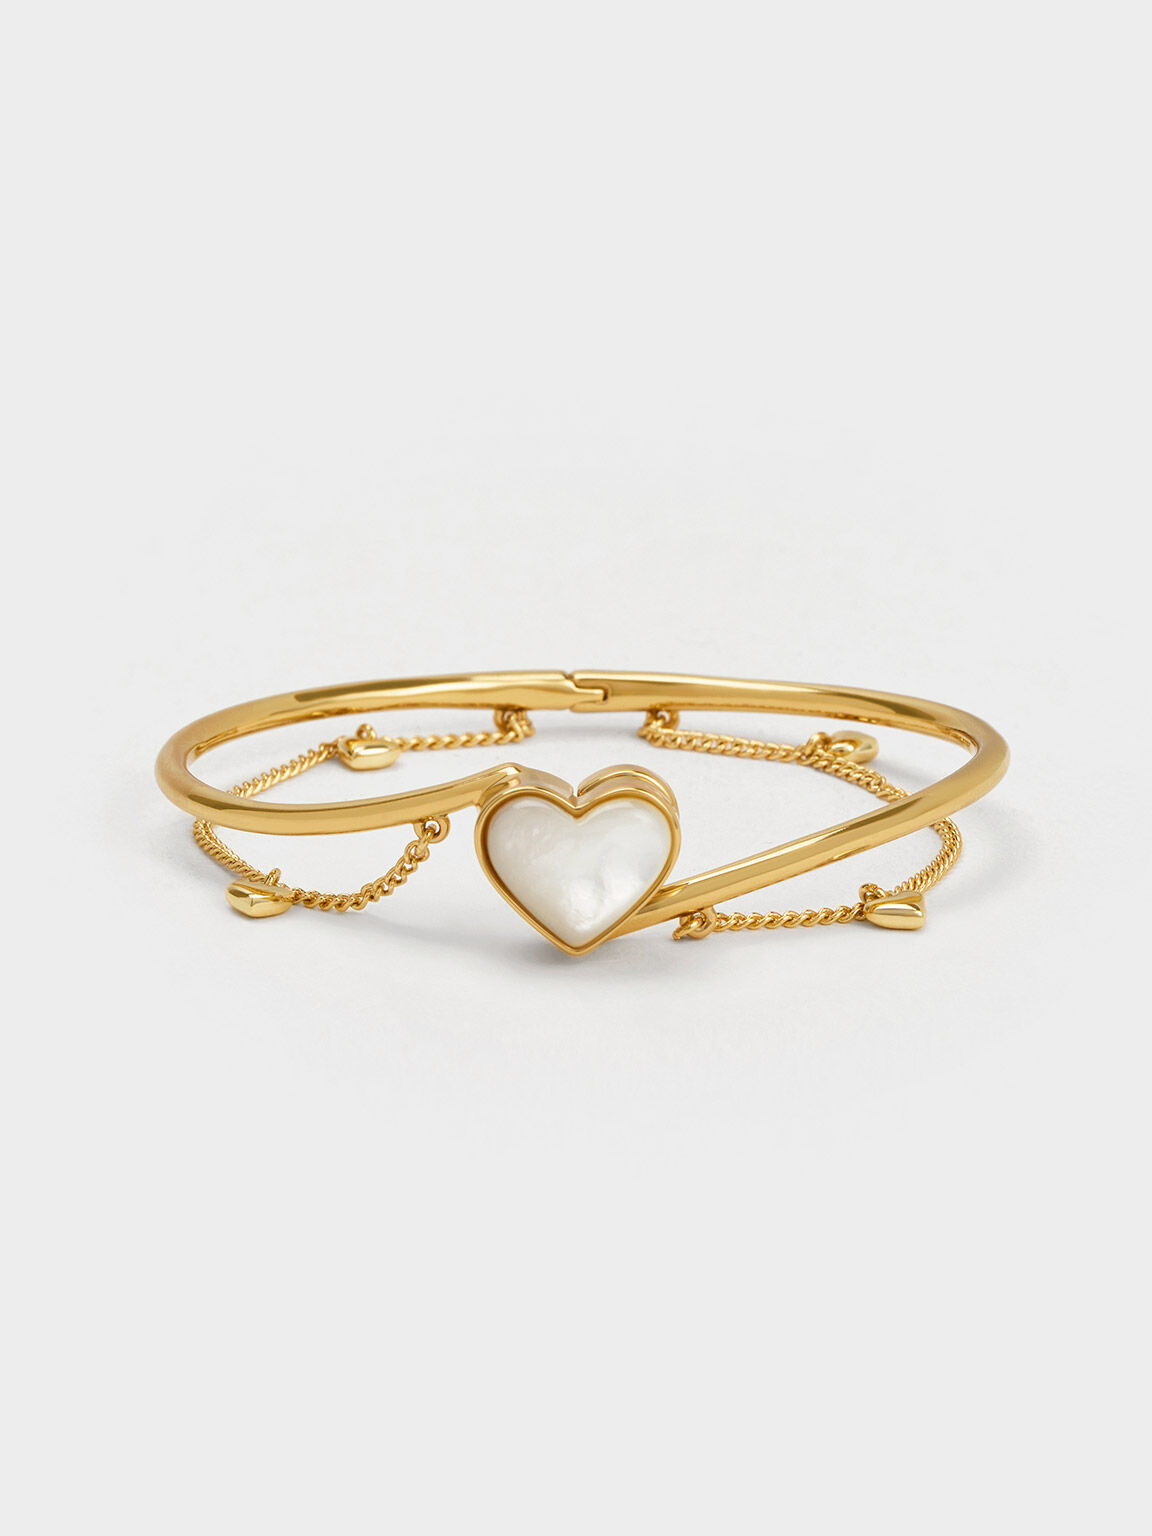 High-WIRE Hallmark Gold Bracelet - Jewelry by Bretta